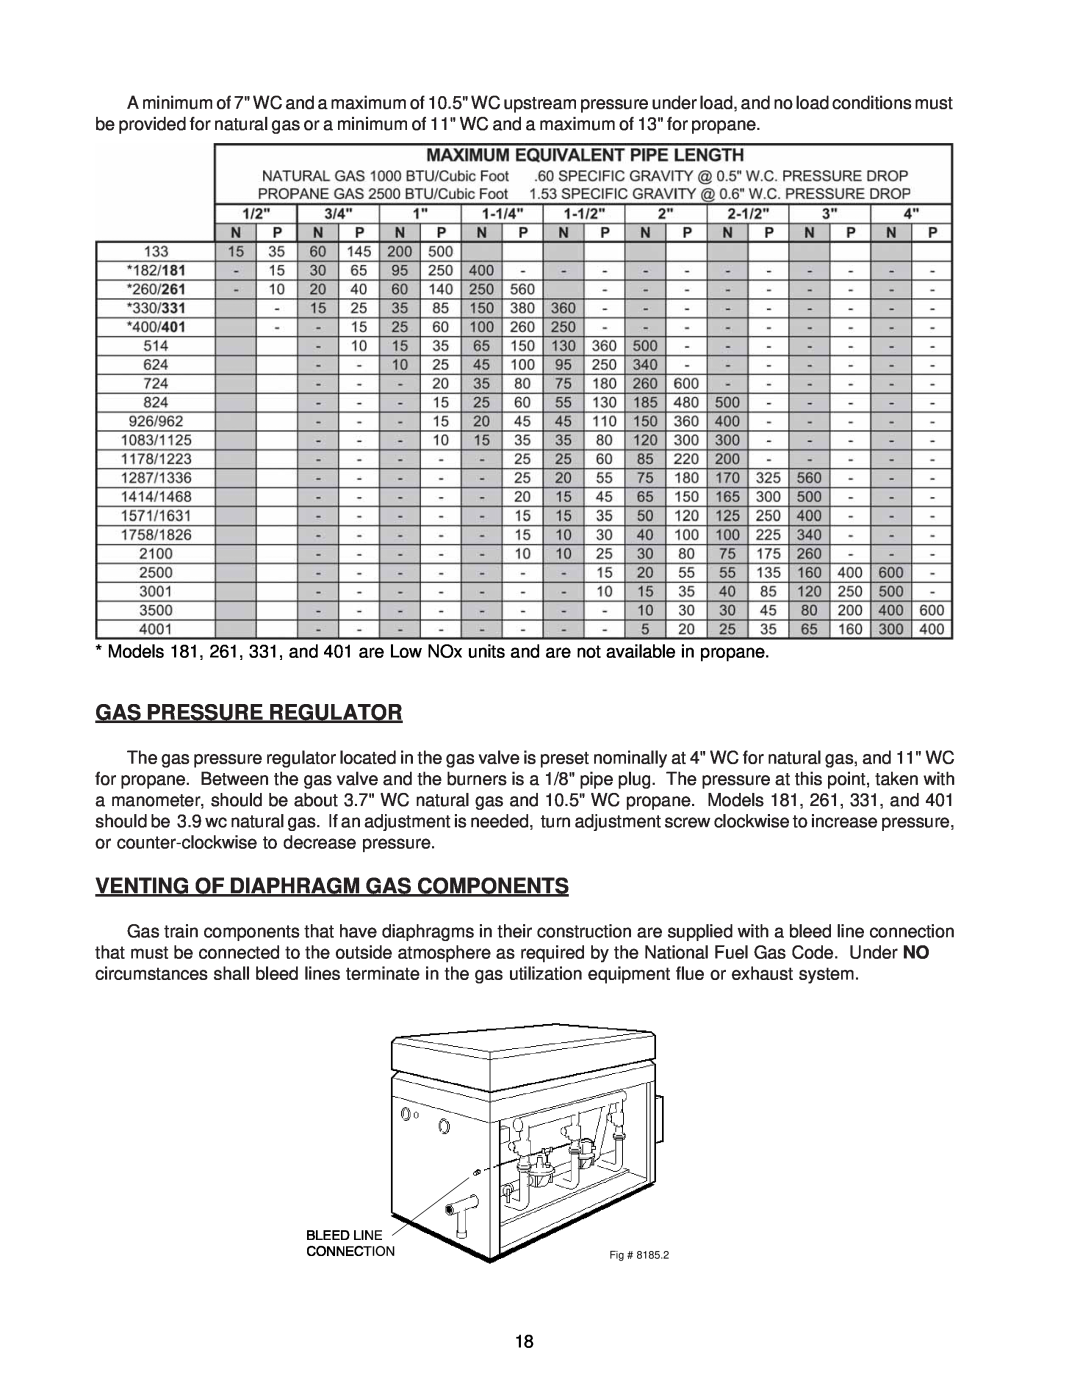 Raypak 0133-4001 manual Gas Pressure Regulator, Venting Of Diaphragm Gas Components 